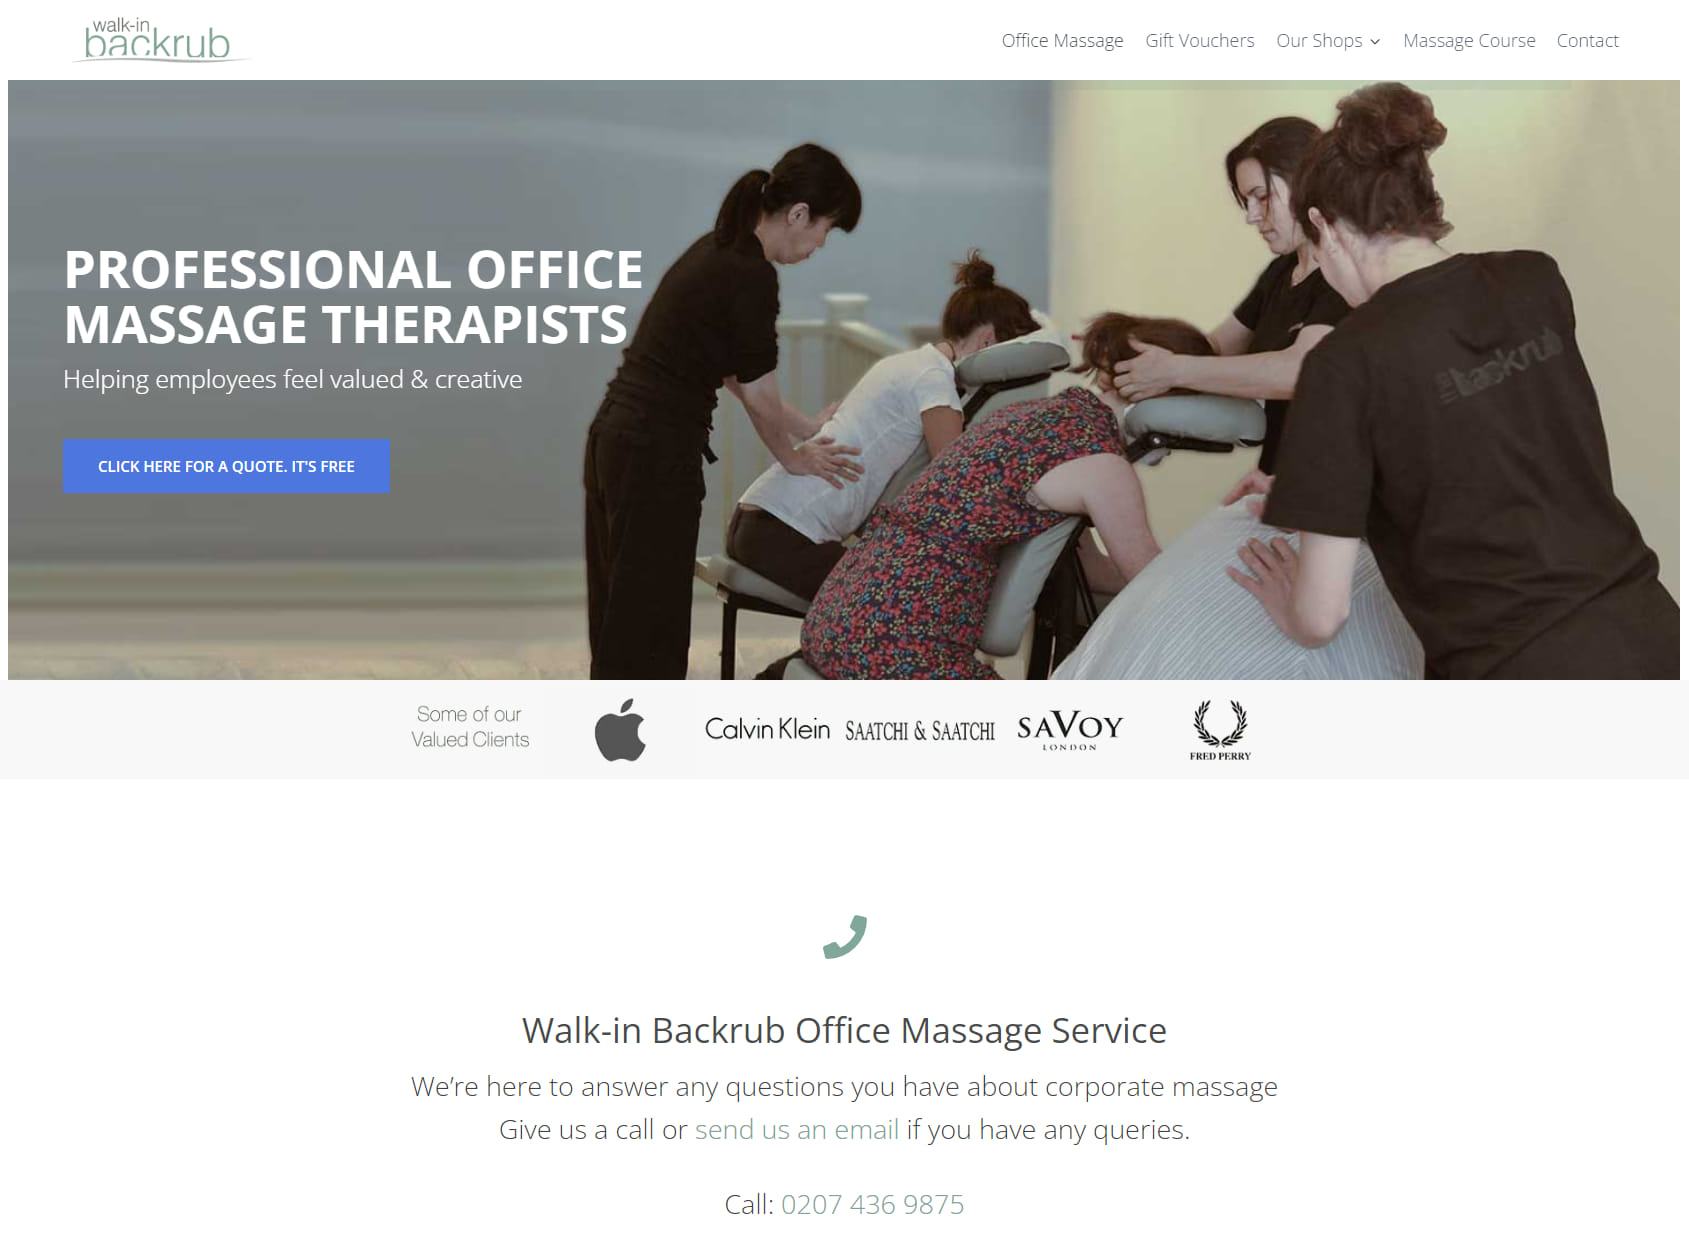 Walk-in Backrub Office Massage